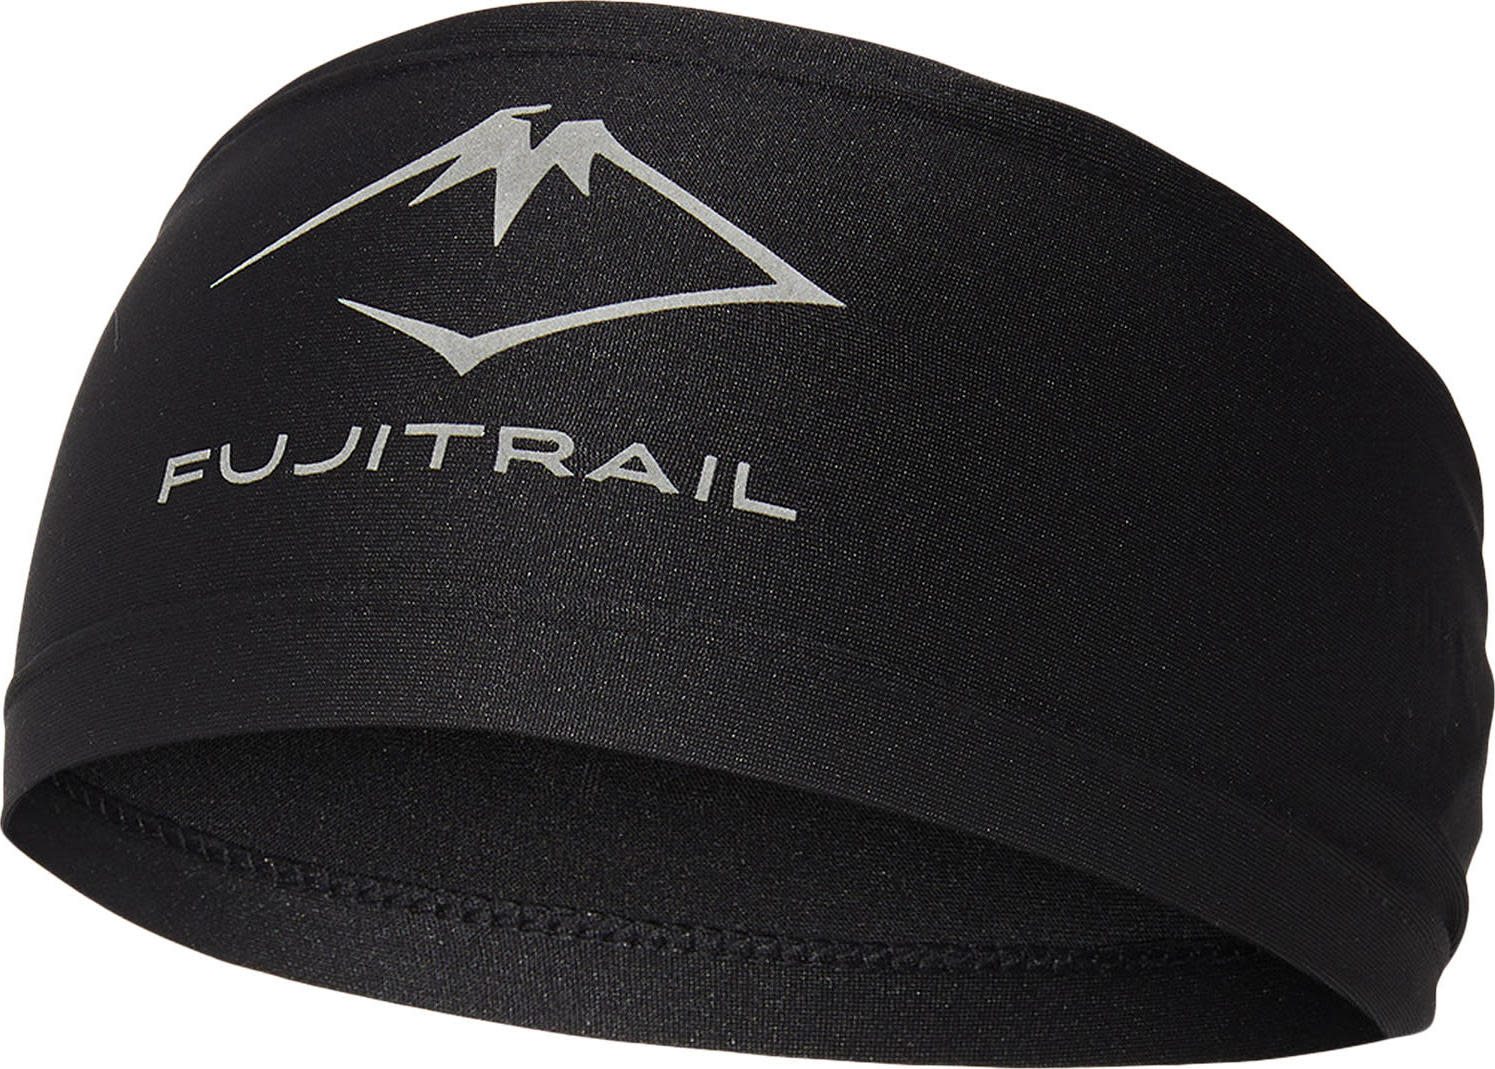 Fujitrail Headband PERFORMANCE BLACK